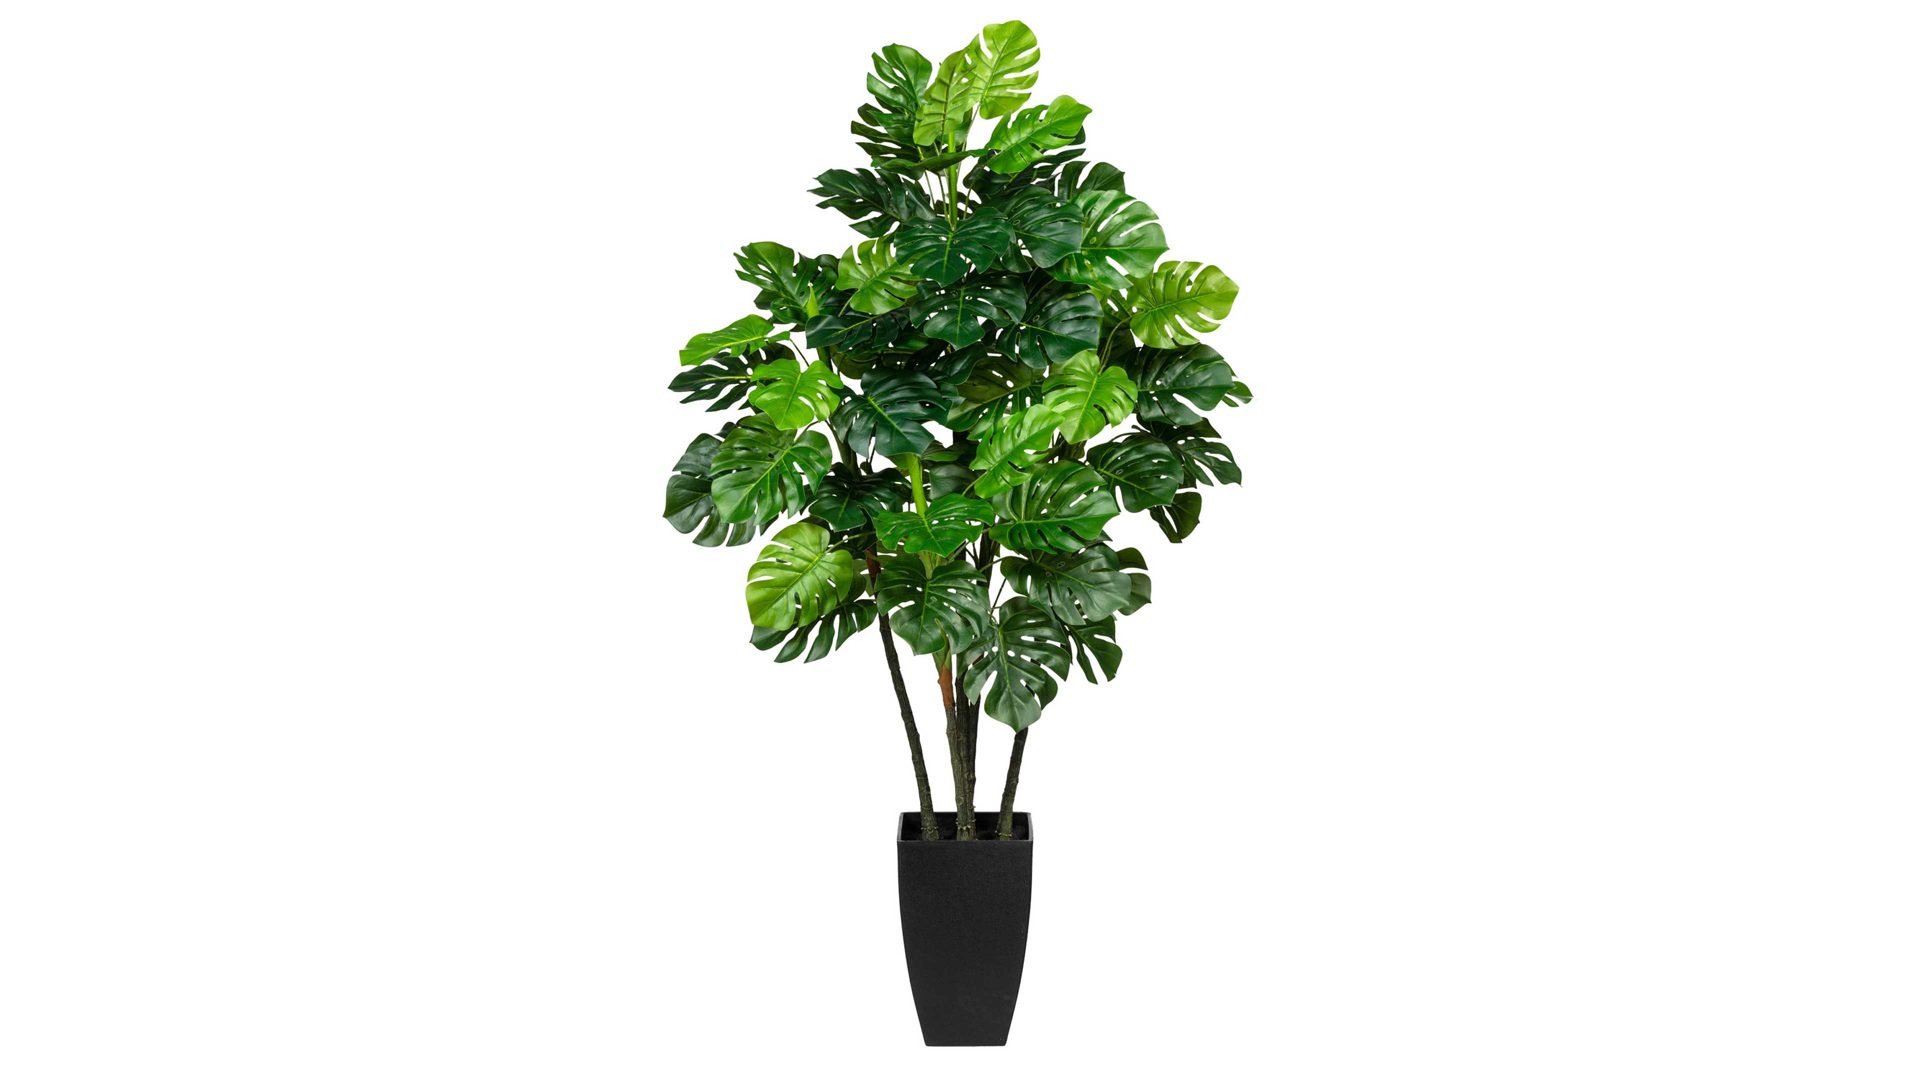 Pflanze Gasper aus Kunststoff in Grün Splitphilodendron grüner Kunststoff & schwarzer Topf – Höhe ca. 105 cm